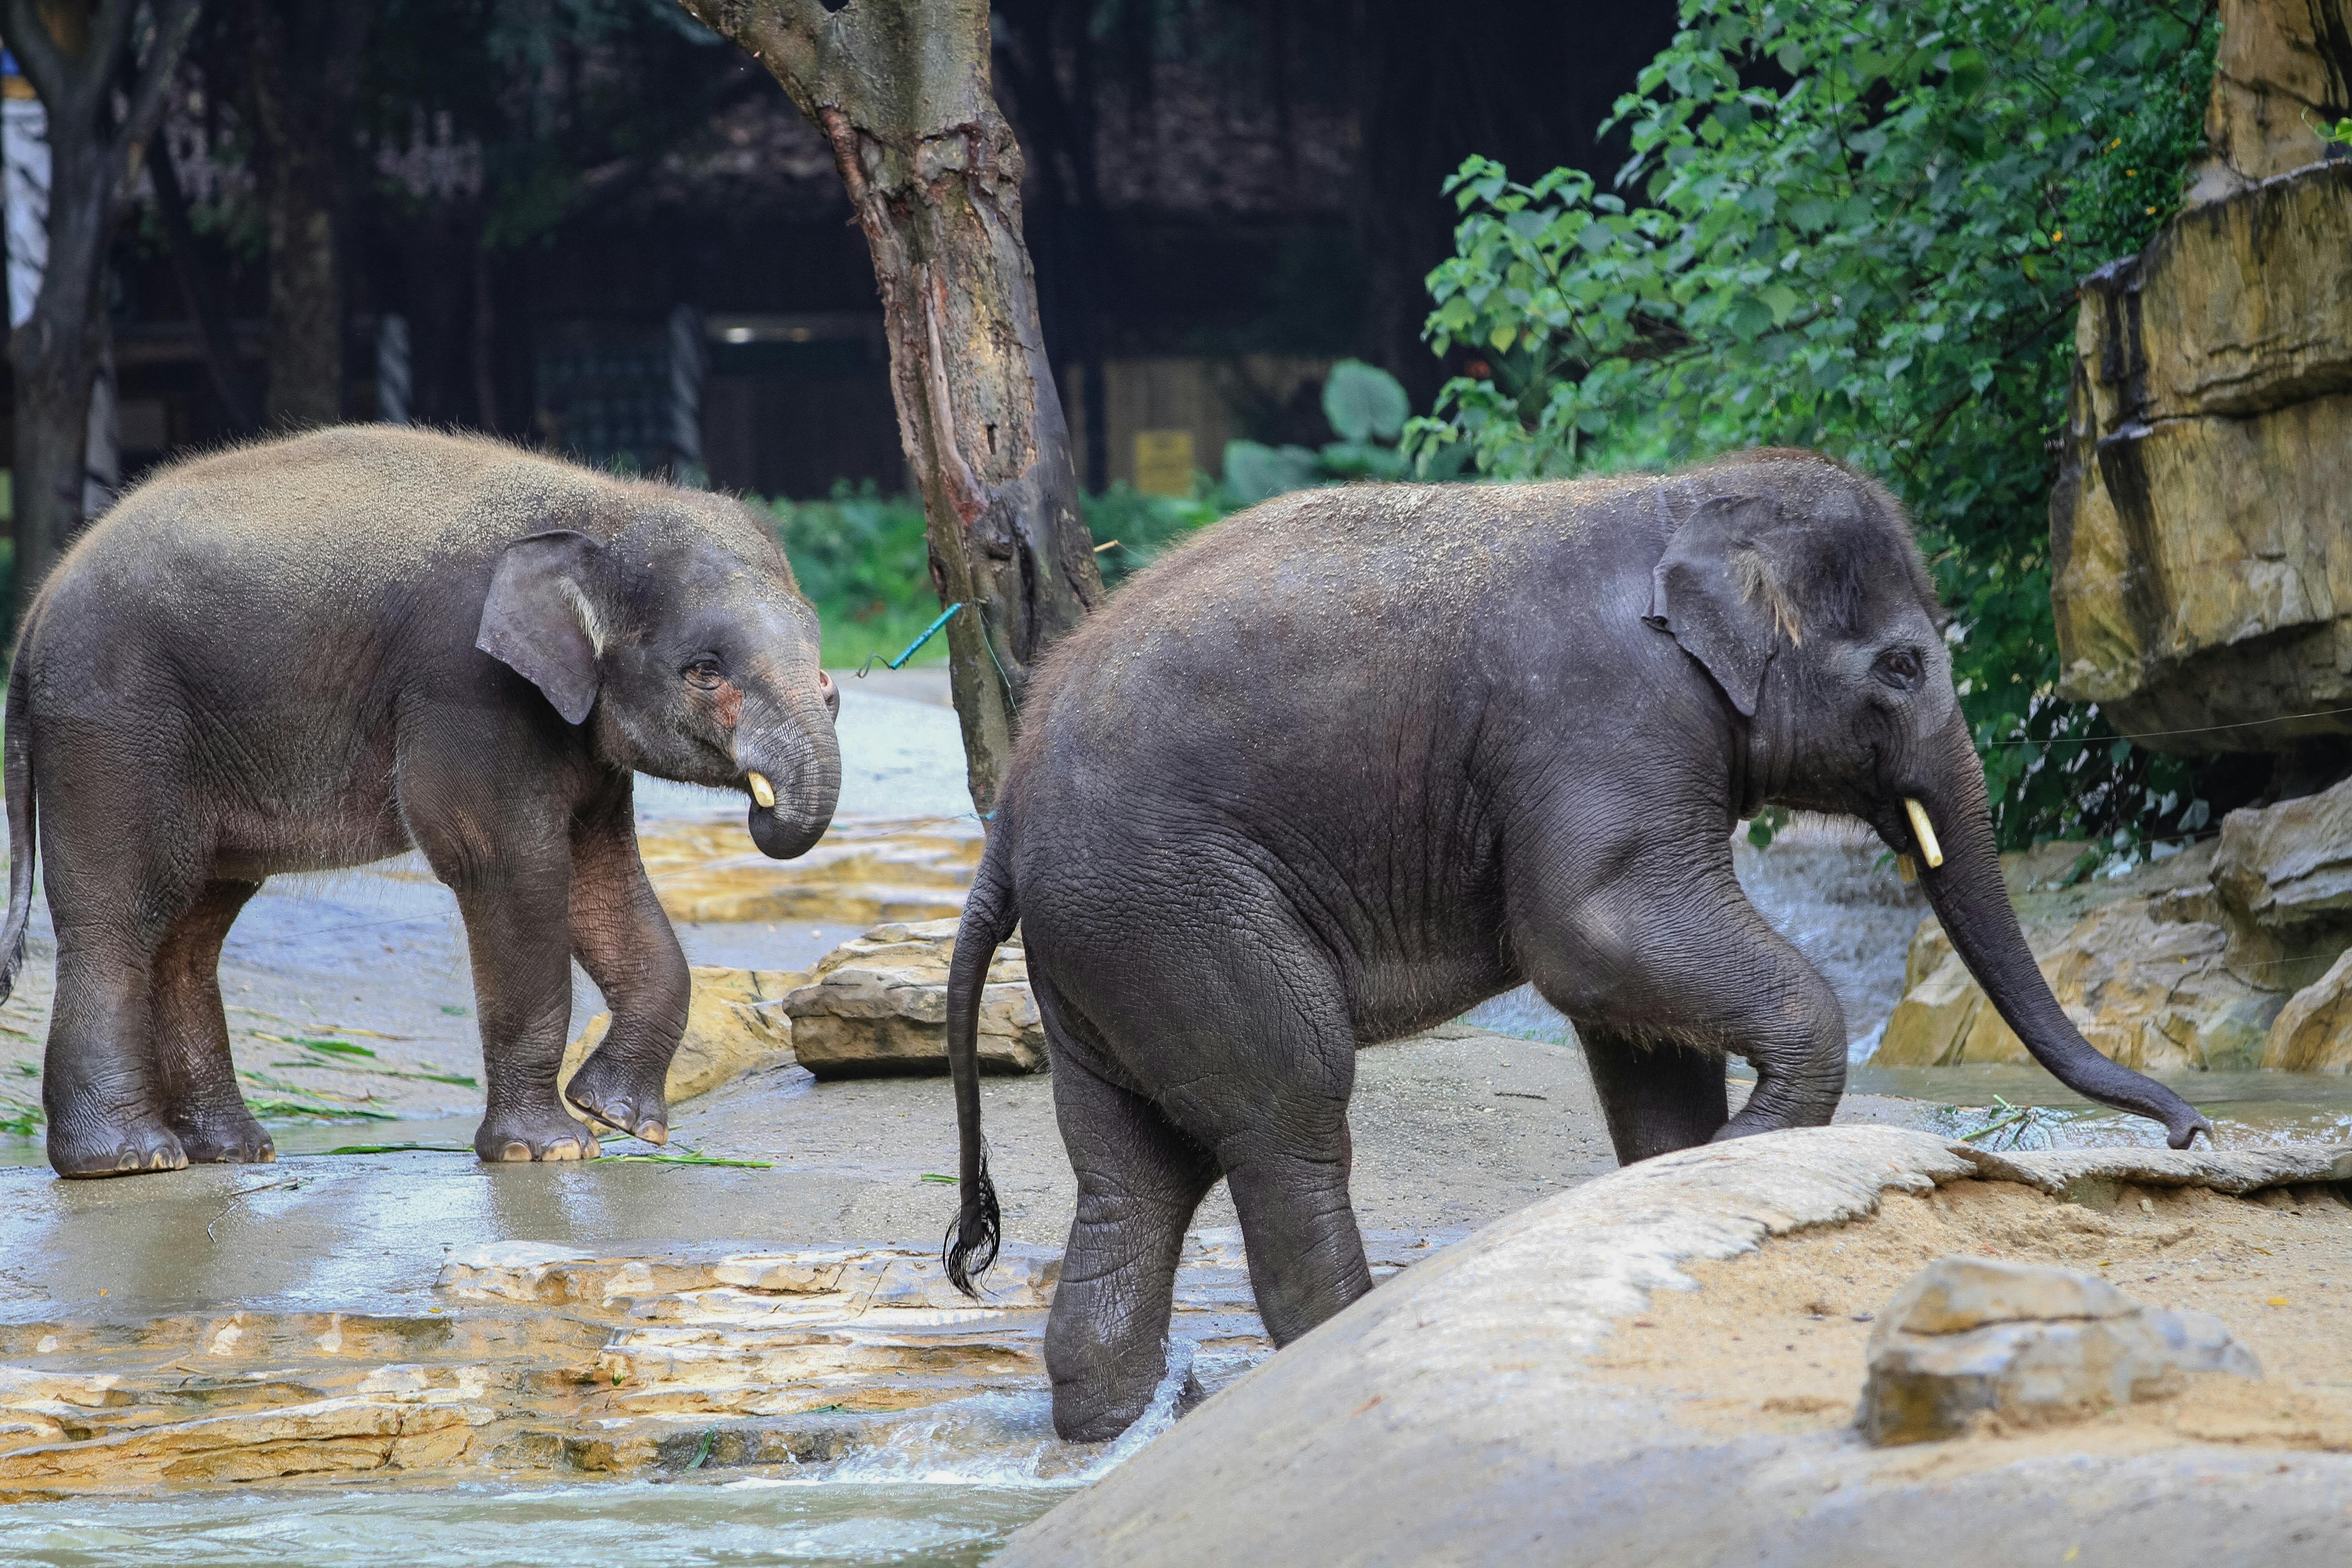 28,691 Baby Elephant Stock Photos - Free & Royalty-Free Stock